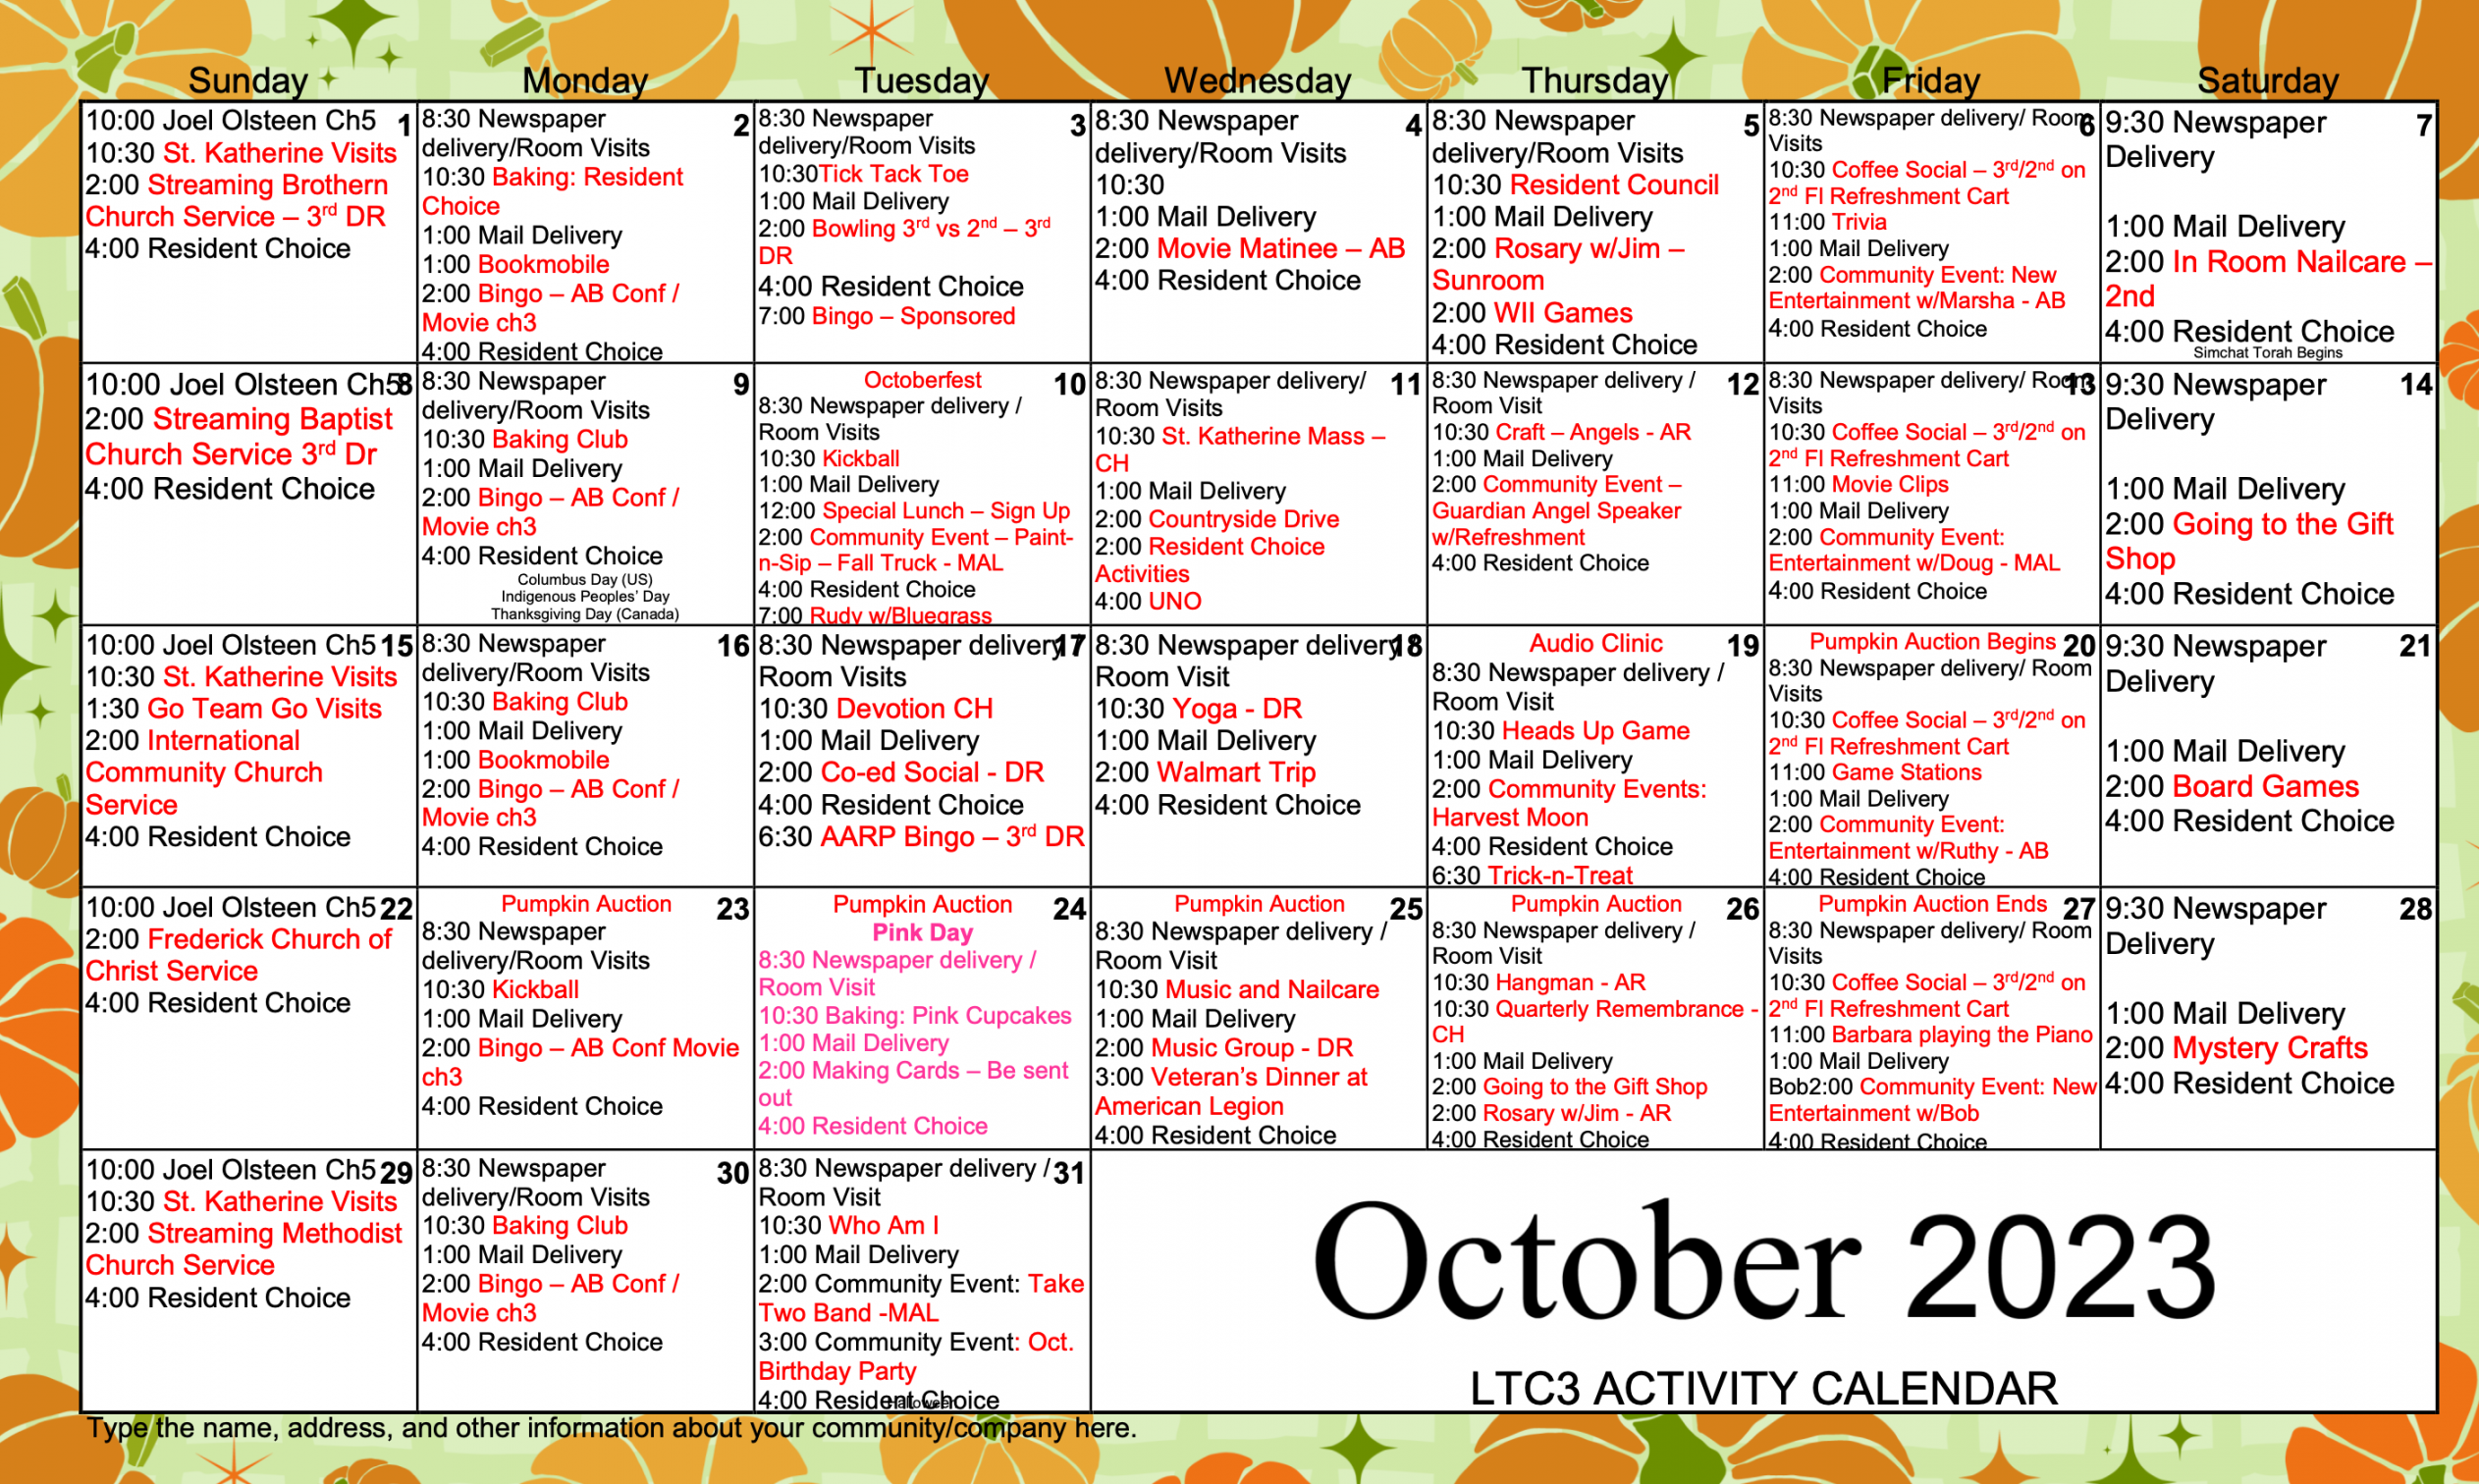 Activity Calendars - Citizens Care and Rehabilitation Center of